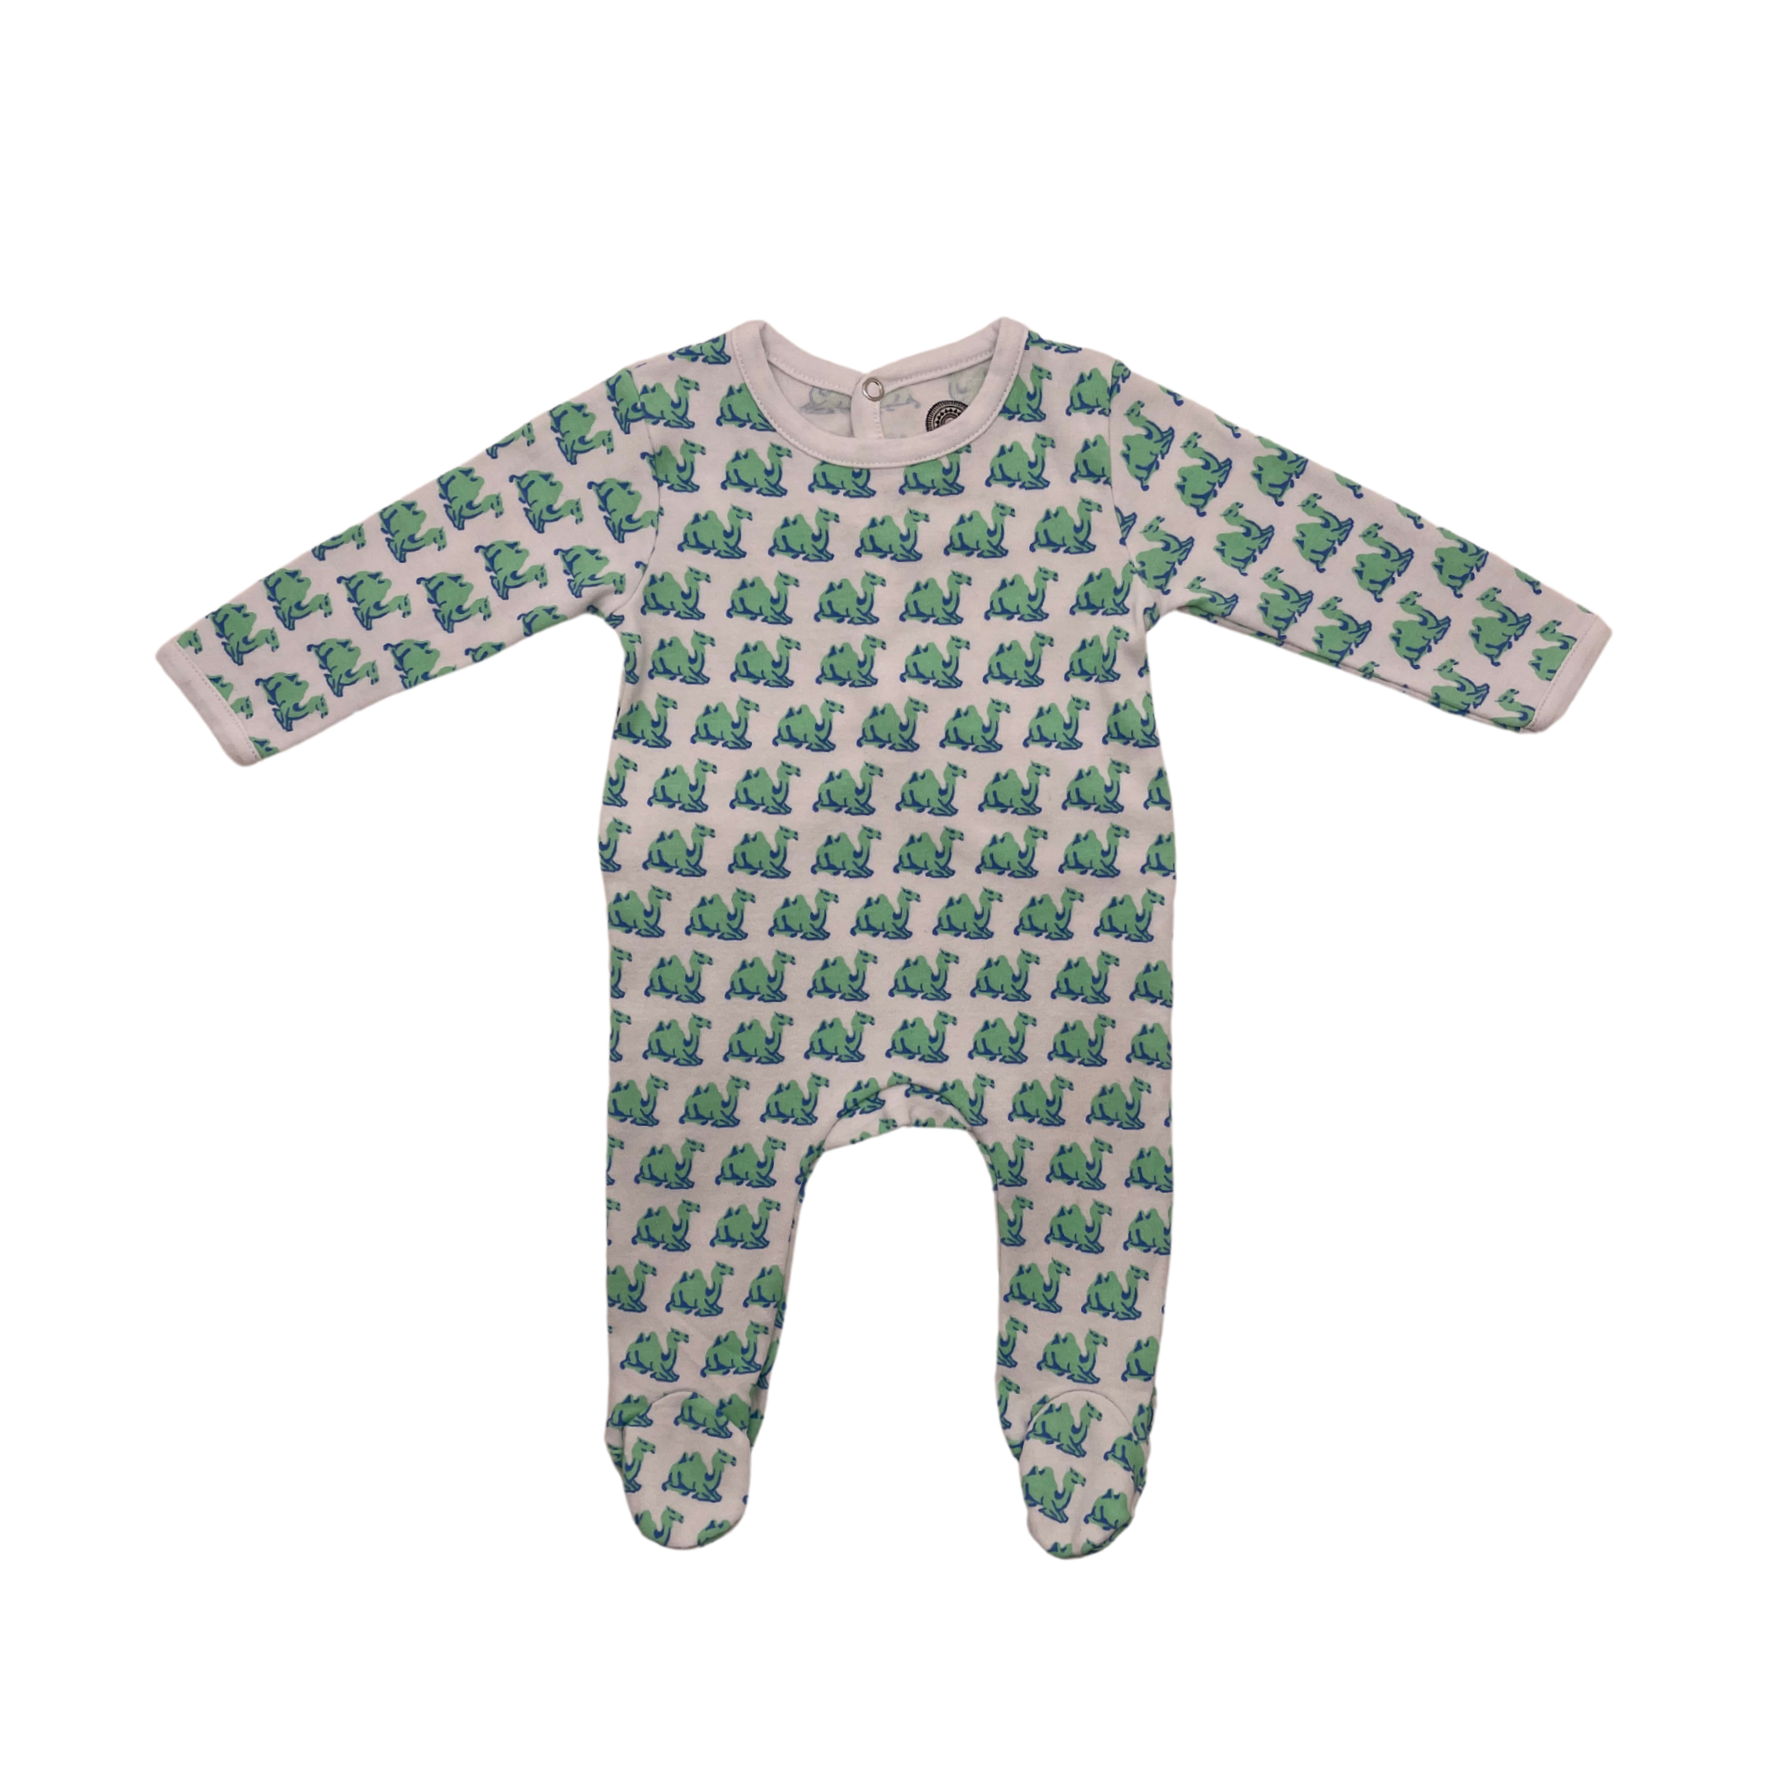 BRAI - Pyjama imprimé chameaux - 3/6 mois